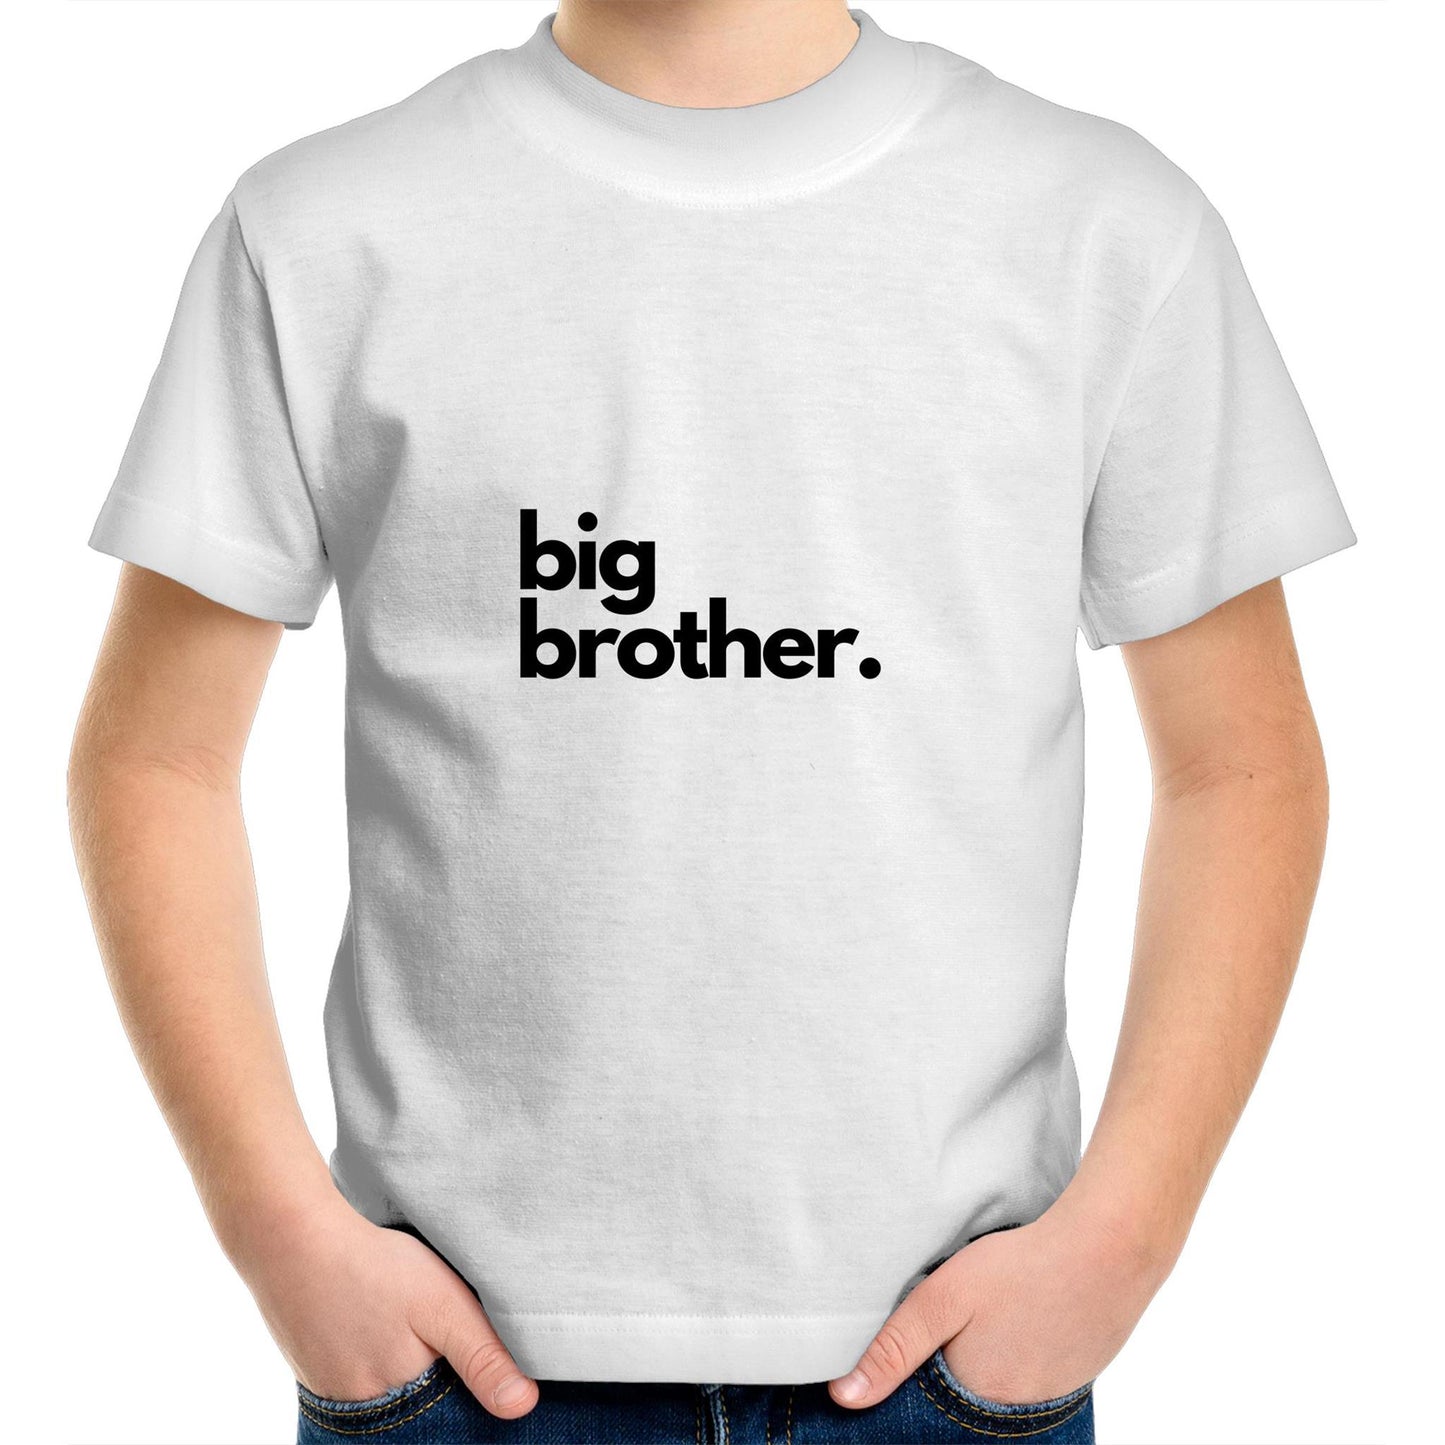 big brother t shirt